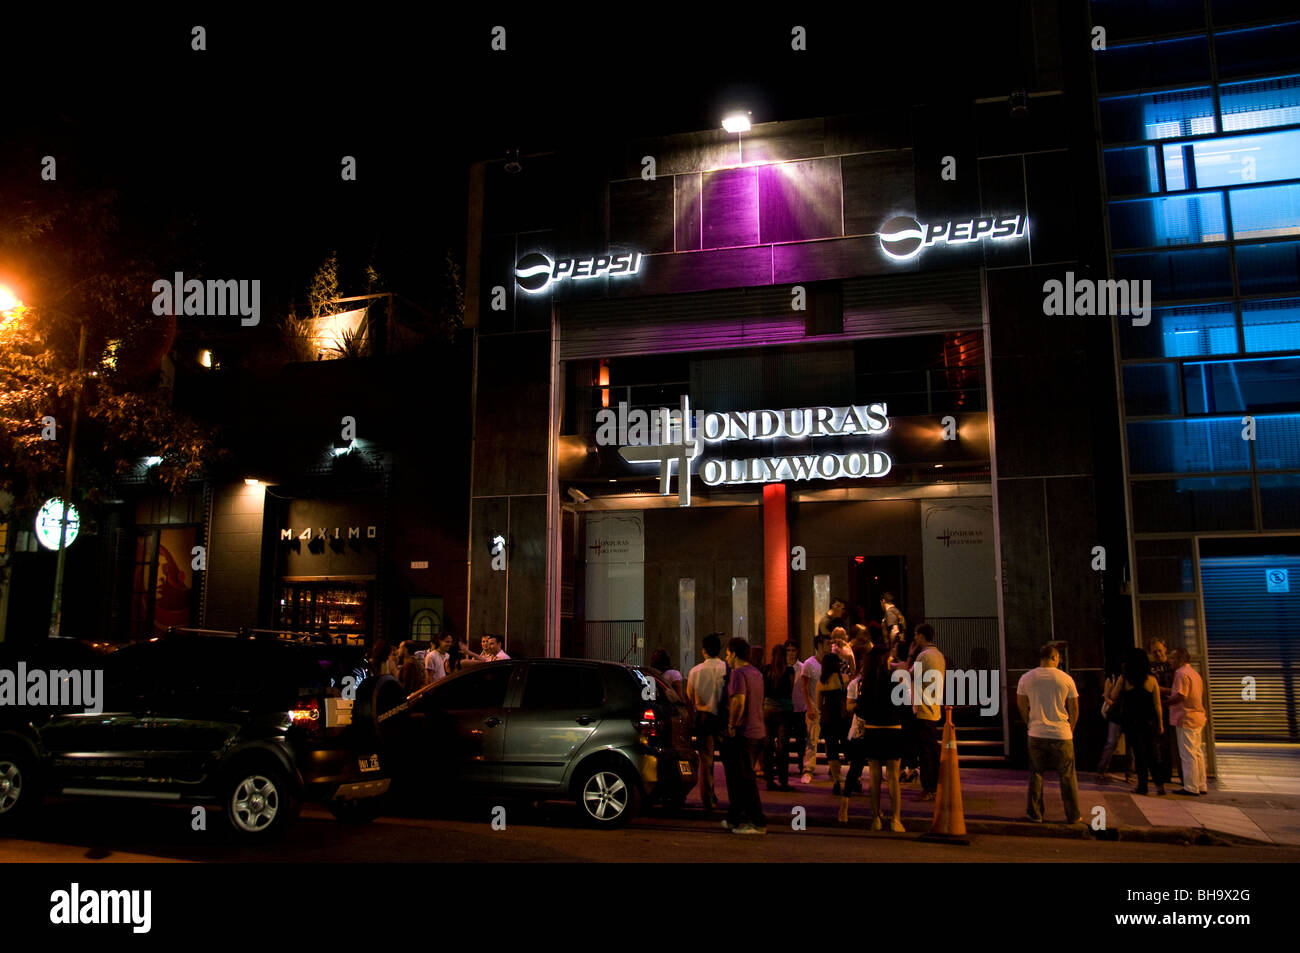 discotheque disco Hollywood Palermo Viejo Bar Cafe Pub Buenos Aires Argentina Stock Photo